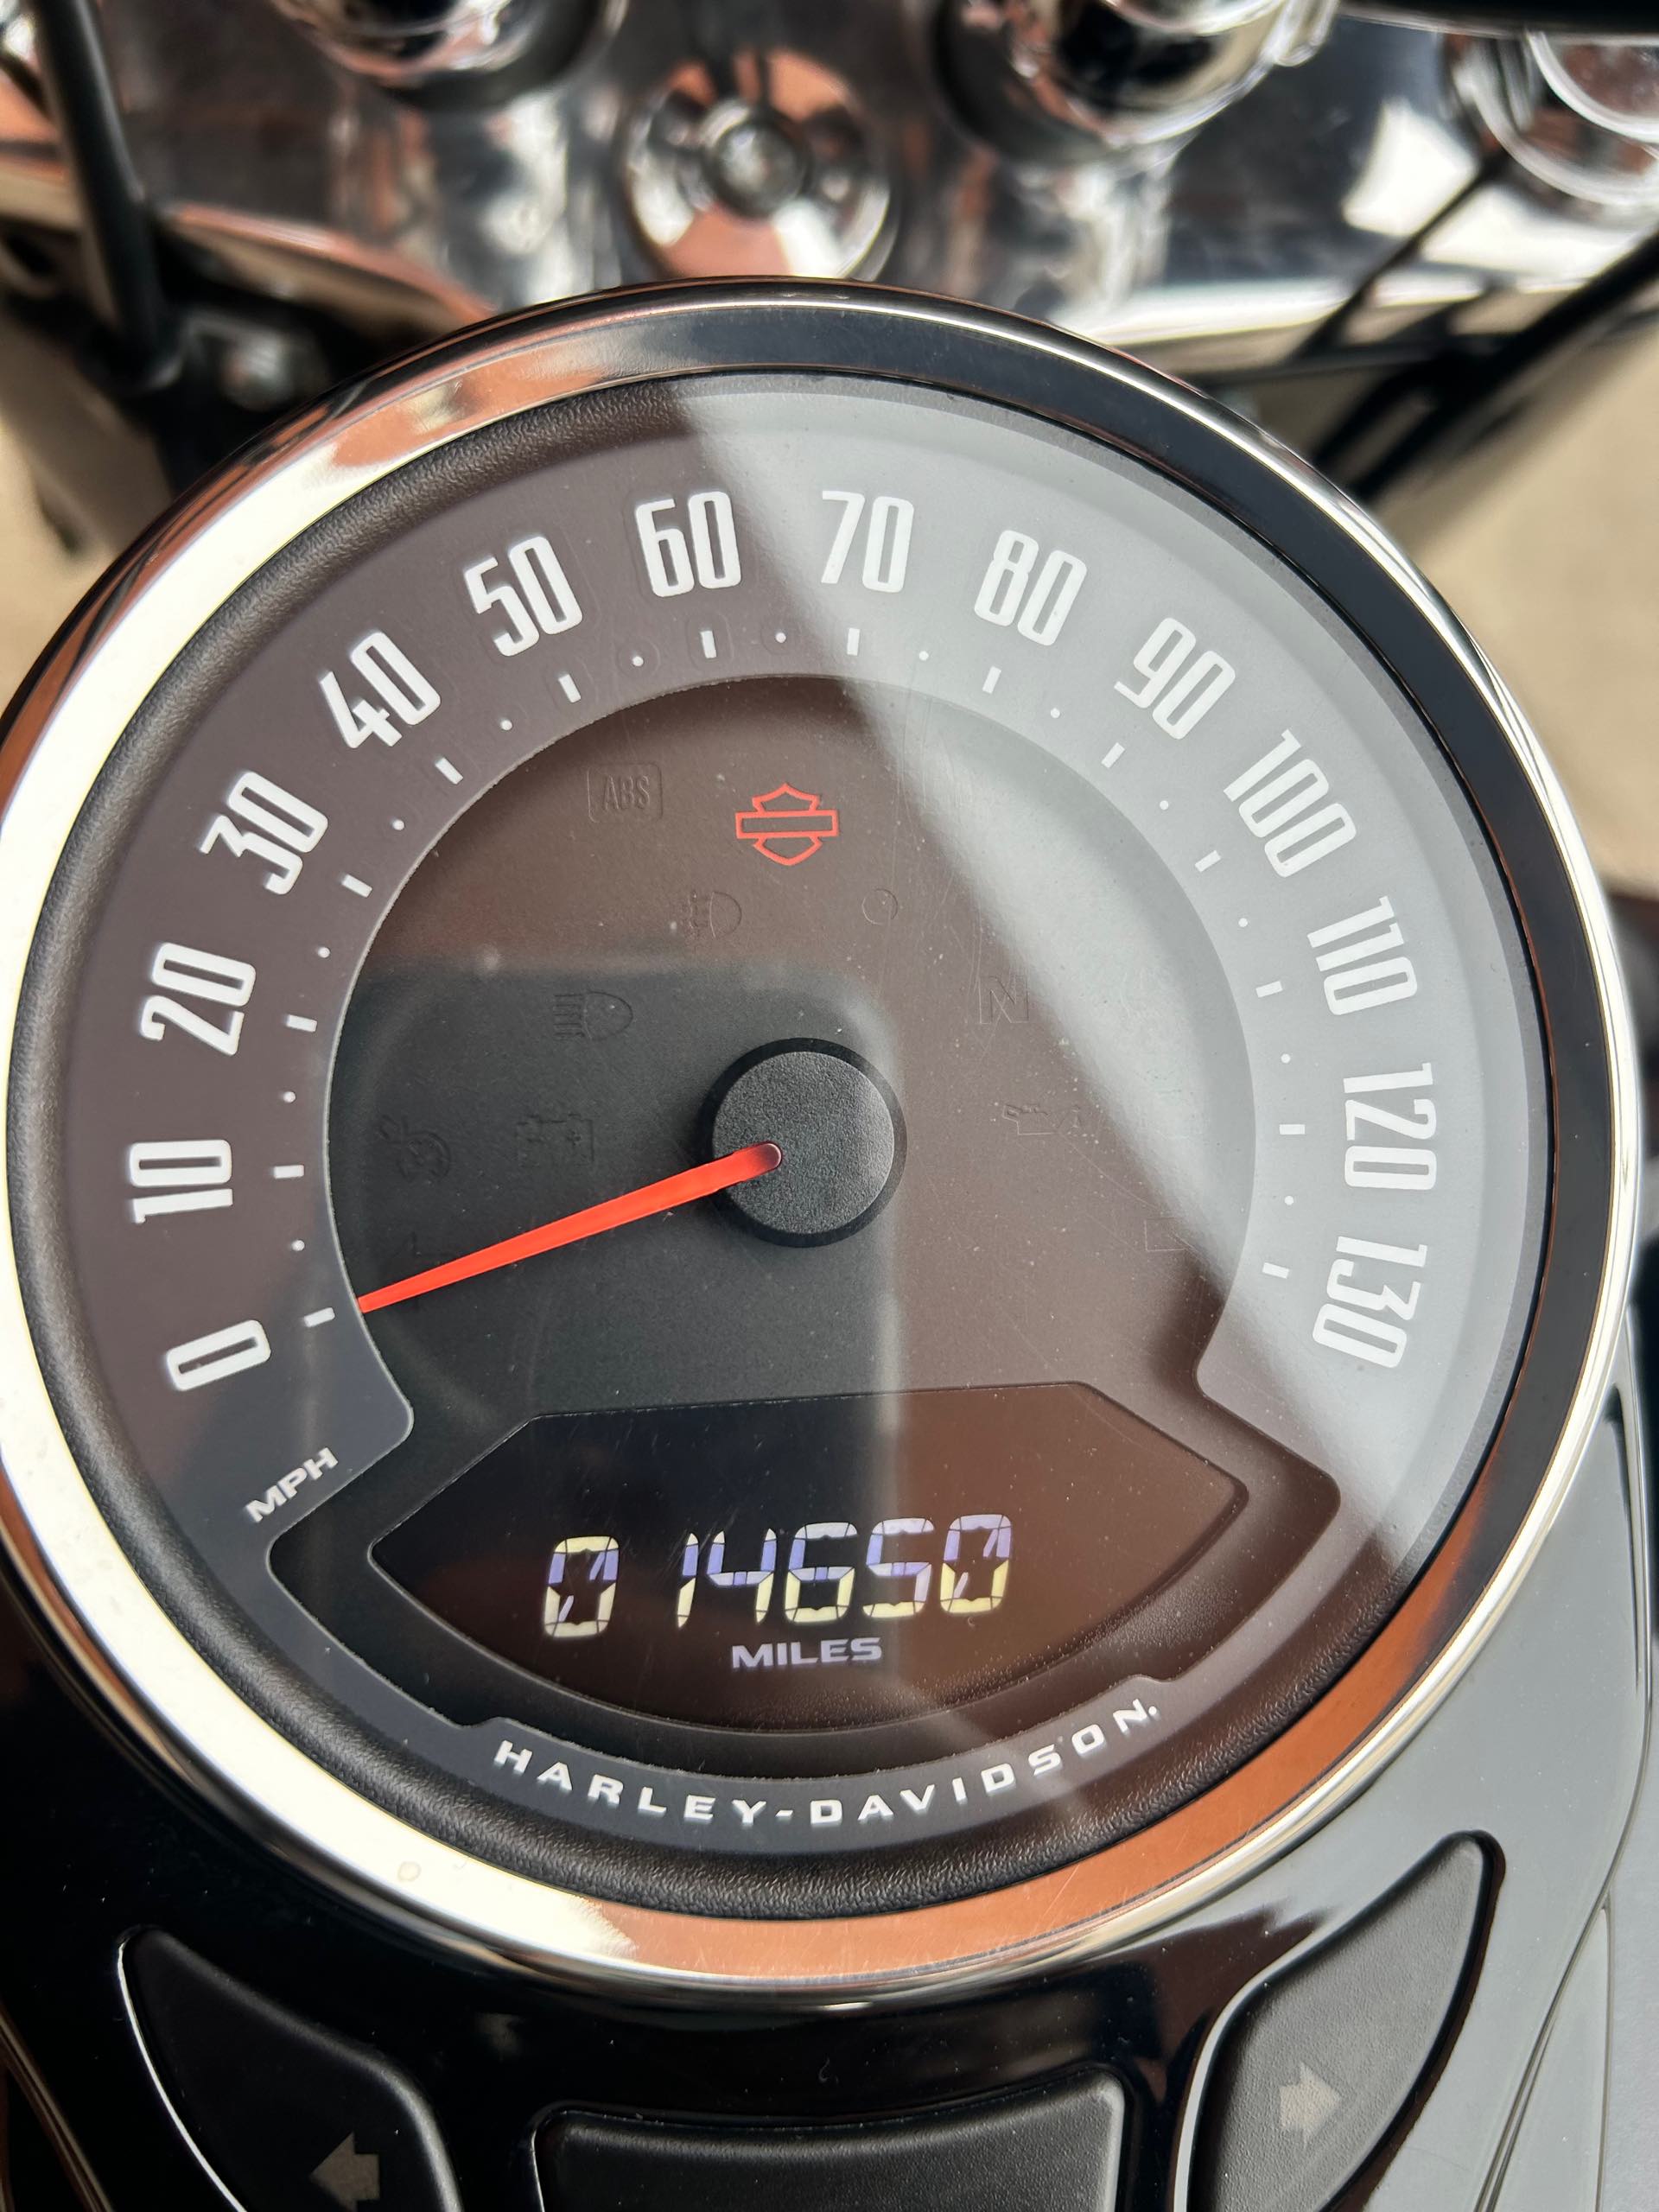 2021 Harley-Davidson Heritage Classic 114 at Arsenal Harley-Davidson